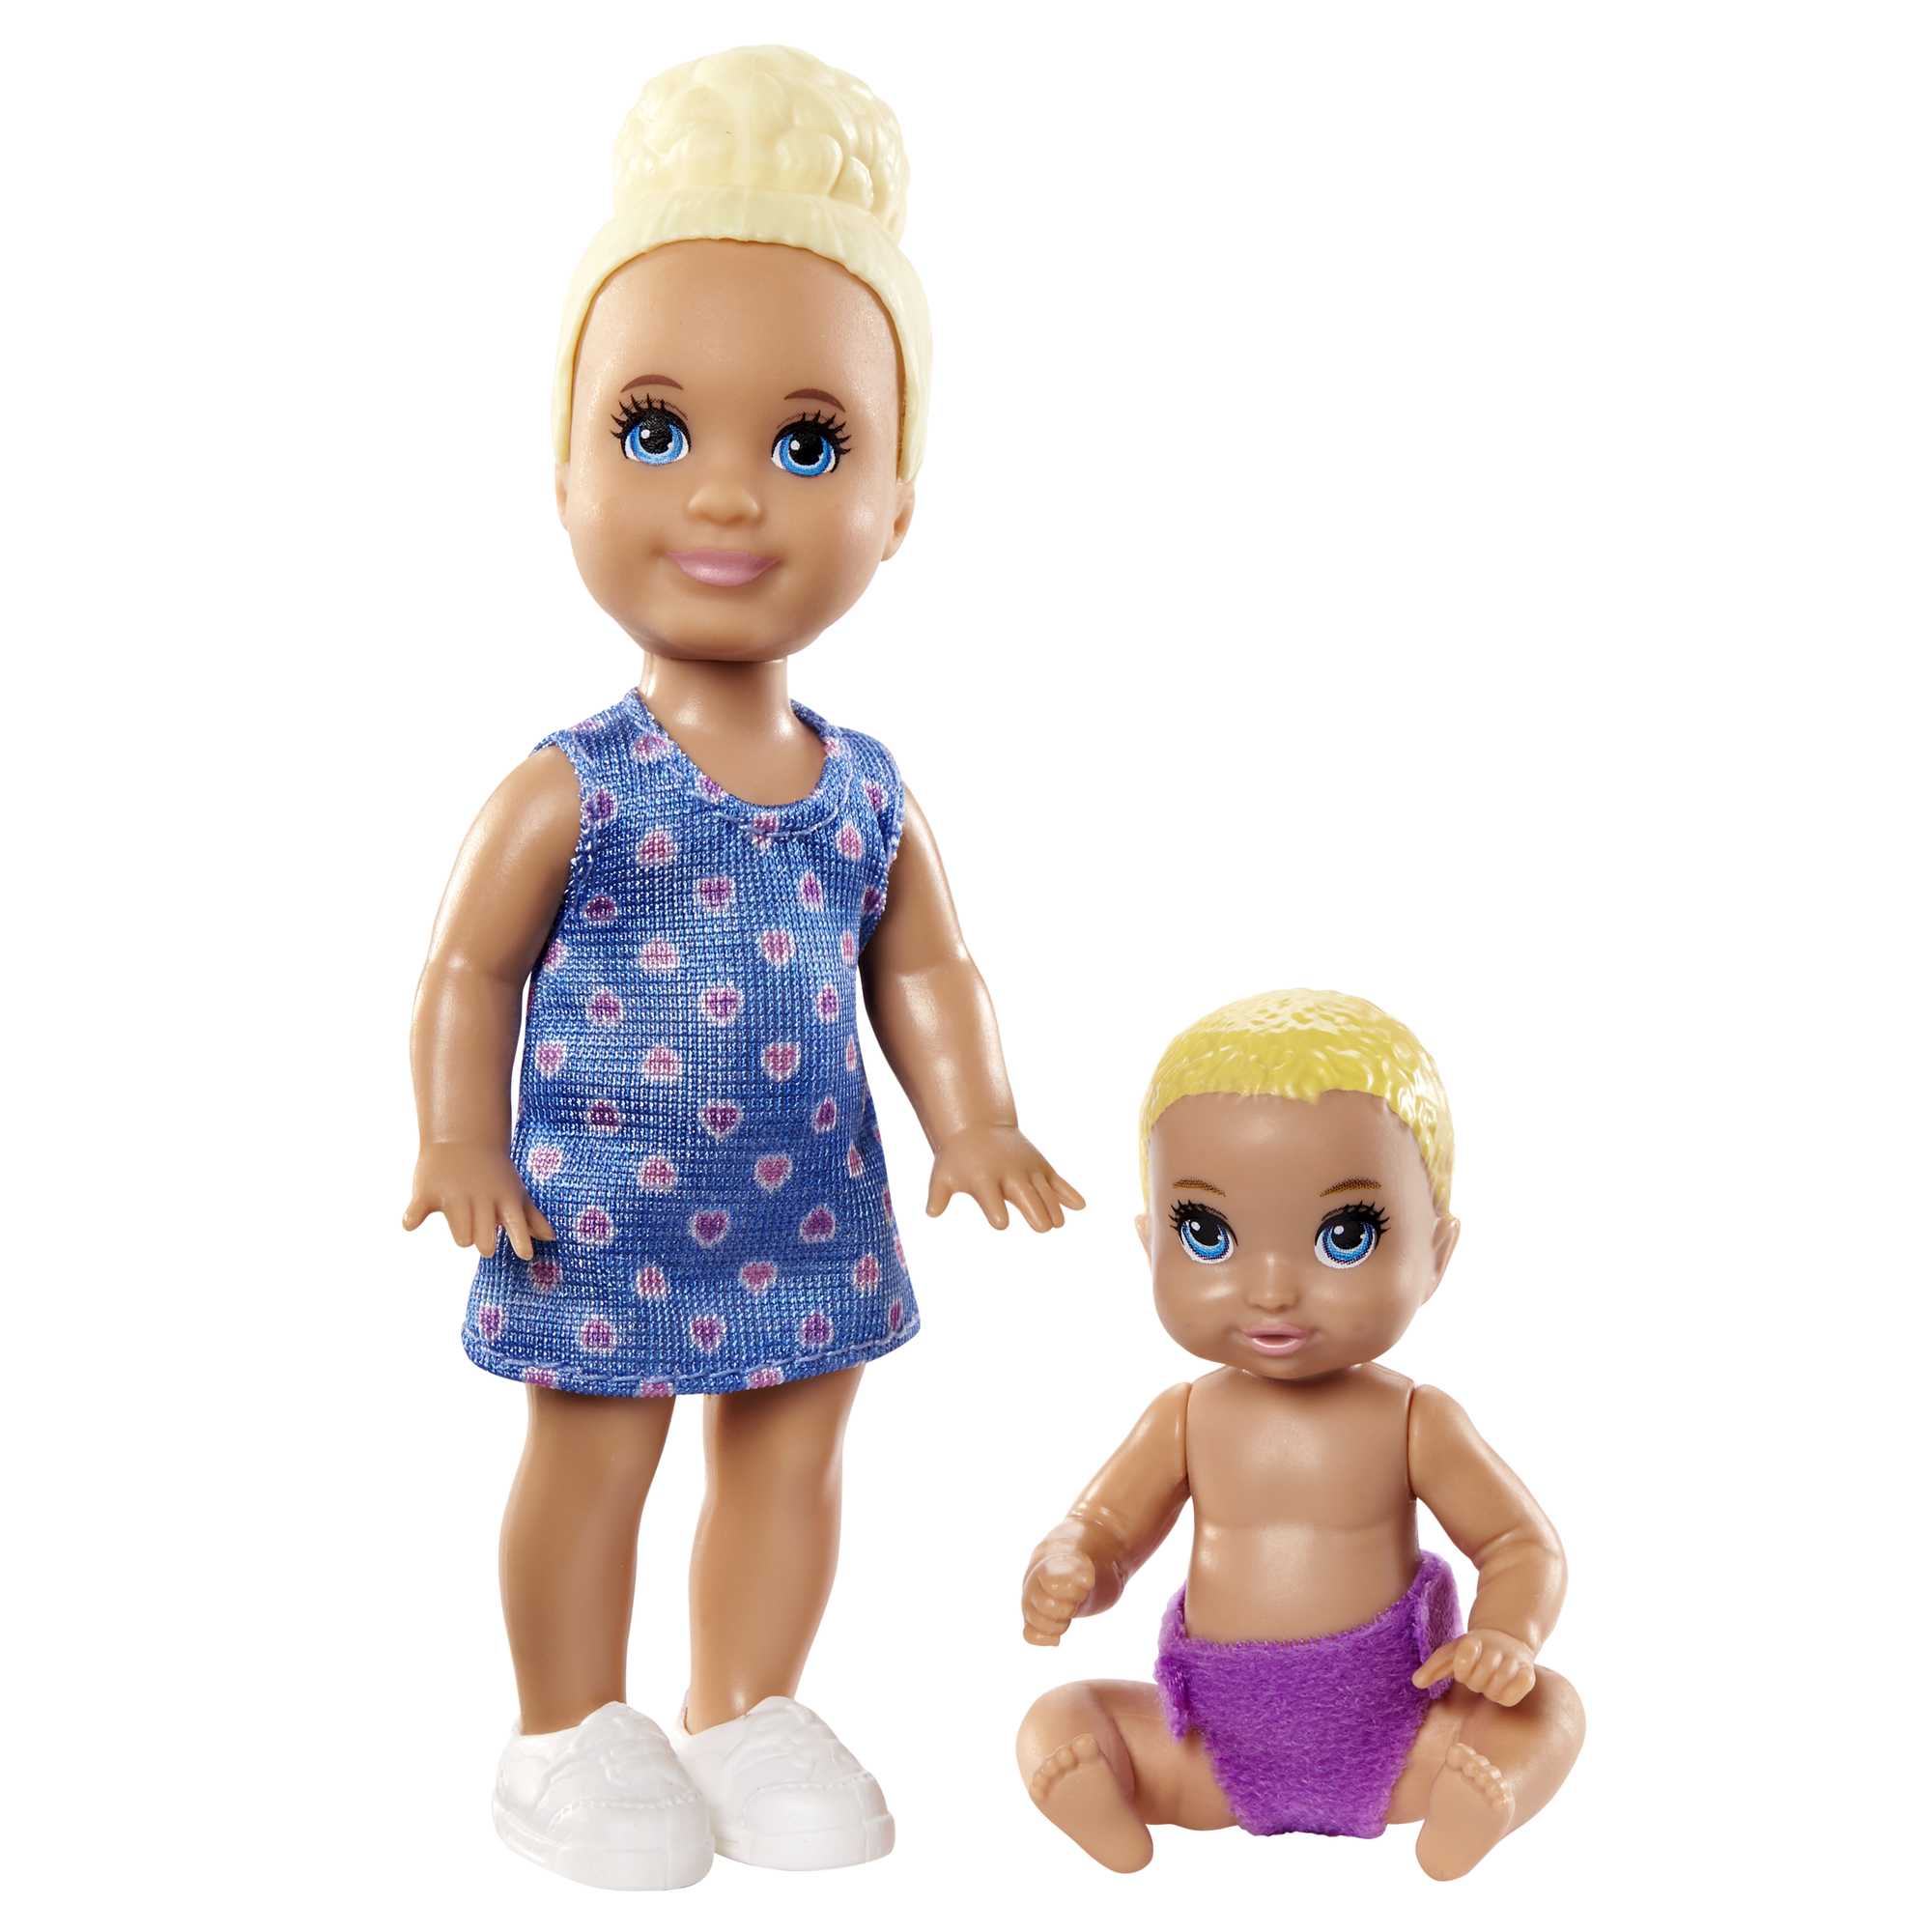 ontploffing Bezwaar pauze Barbie Siblings Pack - Blue Skirt & Blonde Baby | Mattel